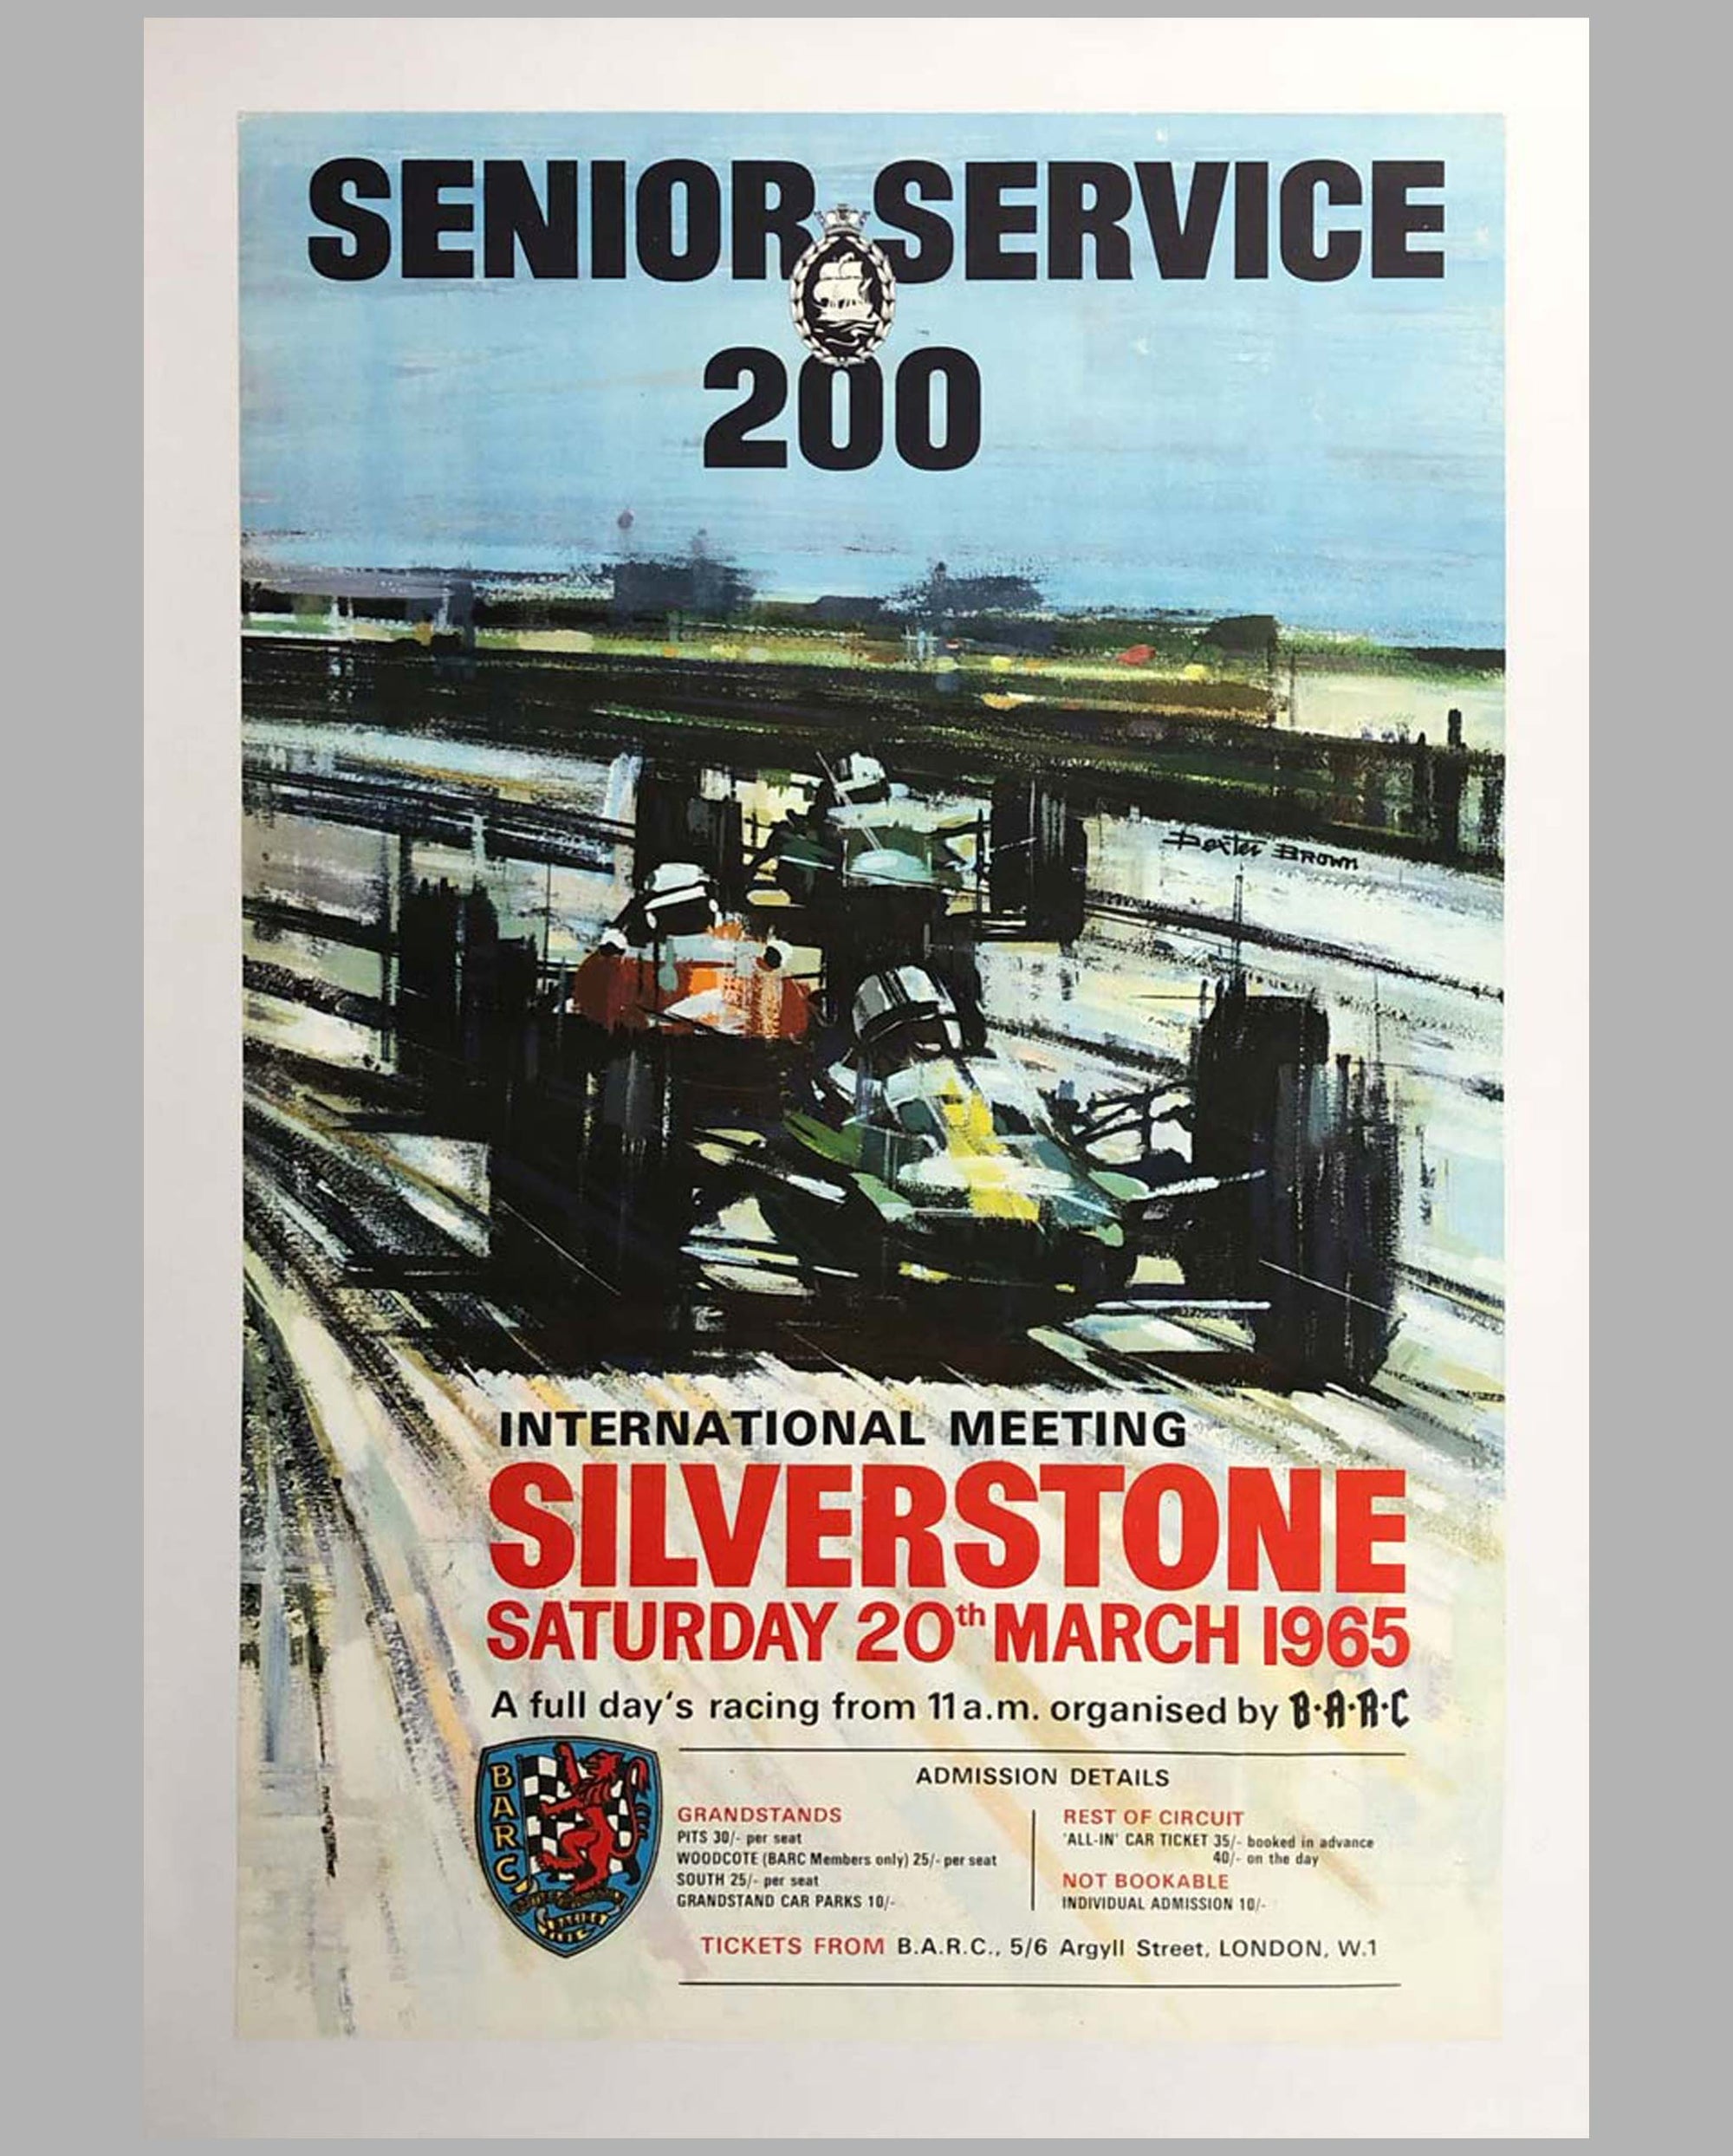 Senior Service 200 at Silverstone original advertising Poster